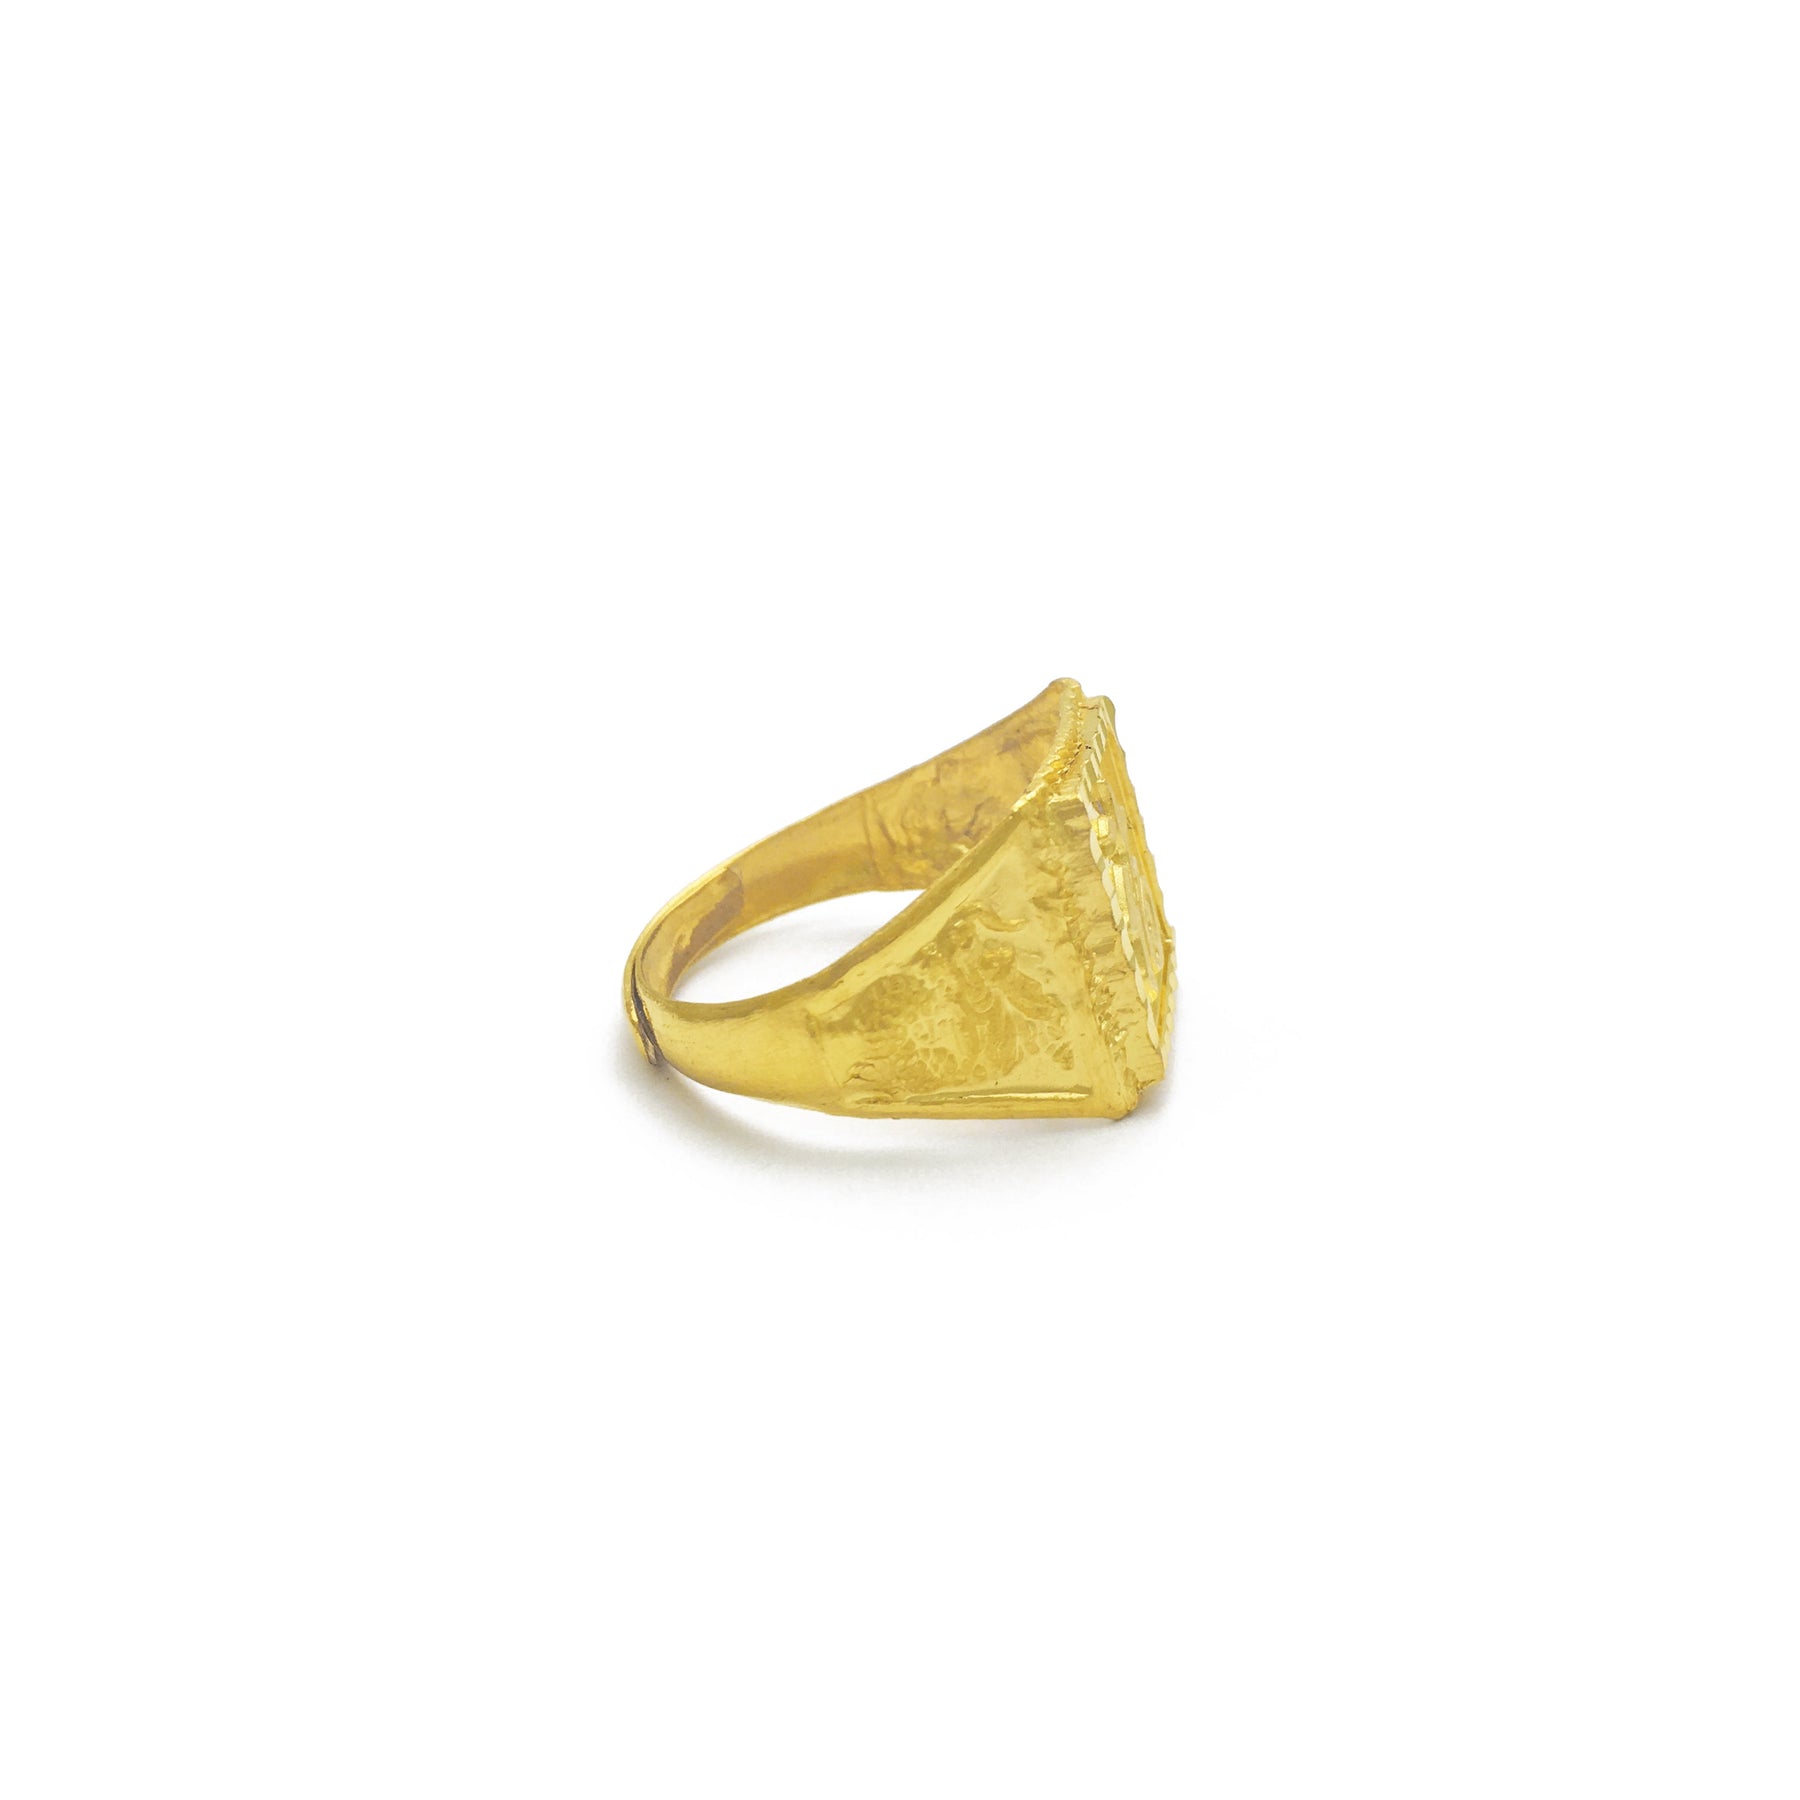 Mens 24K Gold Signet Ring Making - Jewelry Making - Making a ring - 4K  Video - YouTube